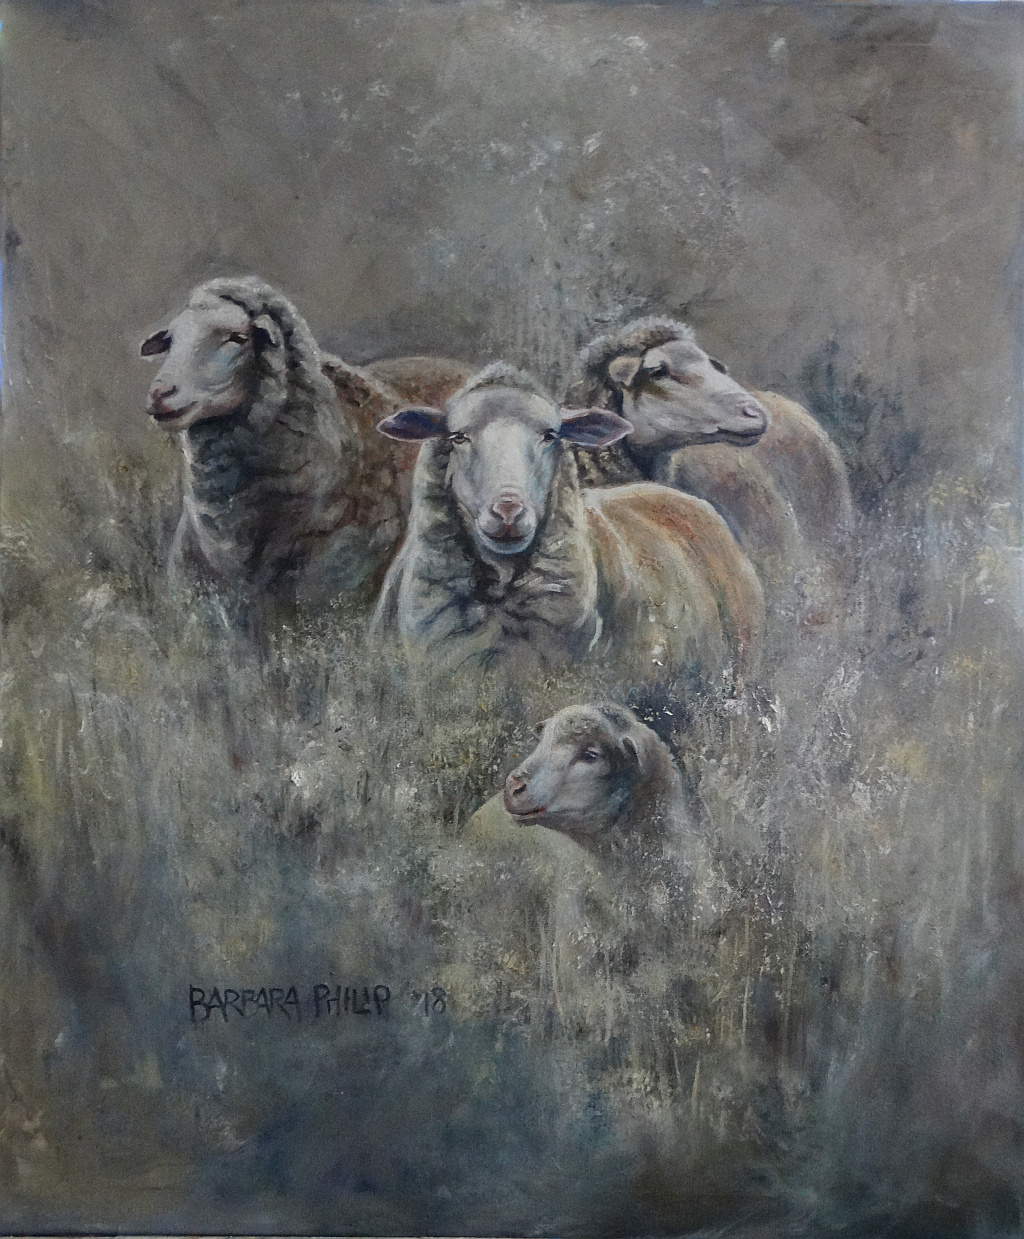 My 2018 sheep painting challenge. No. 1